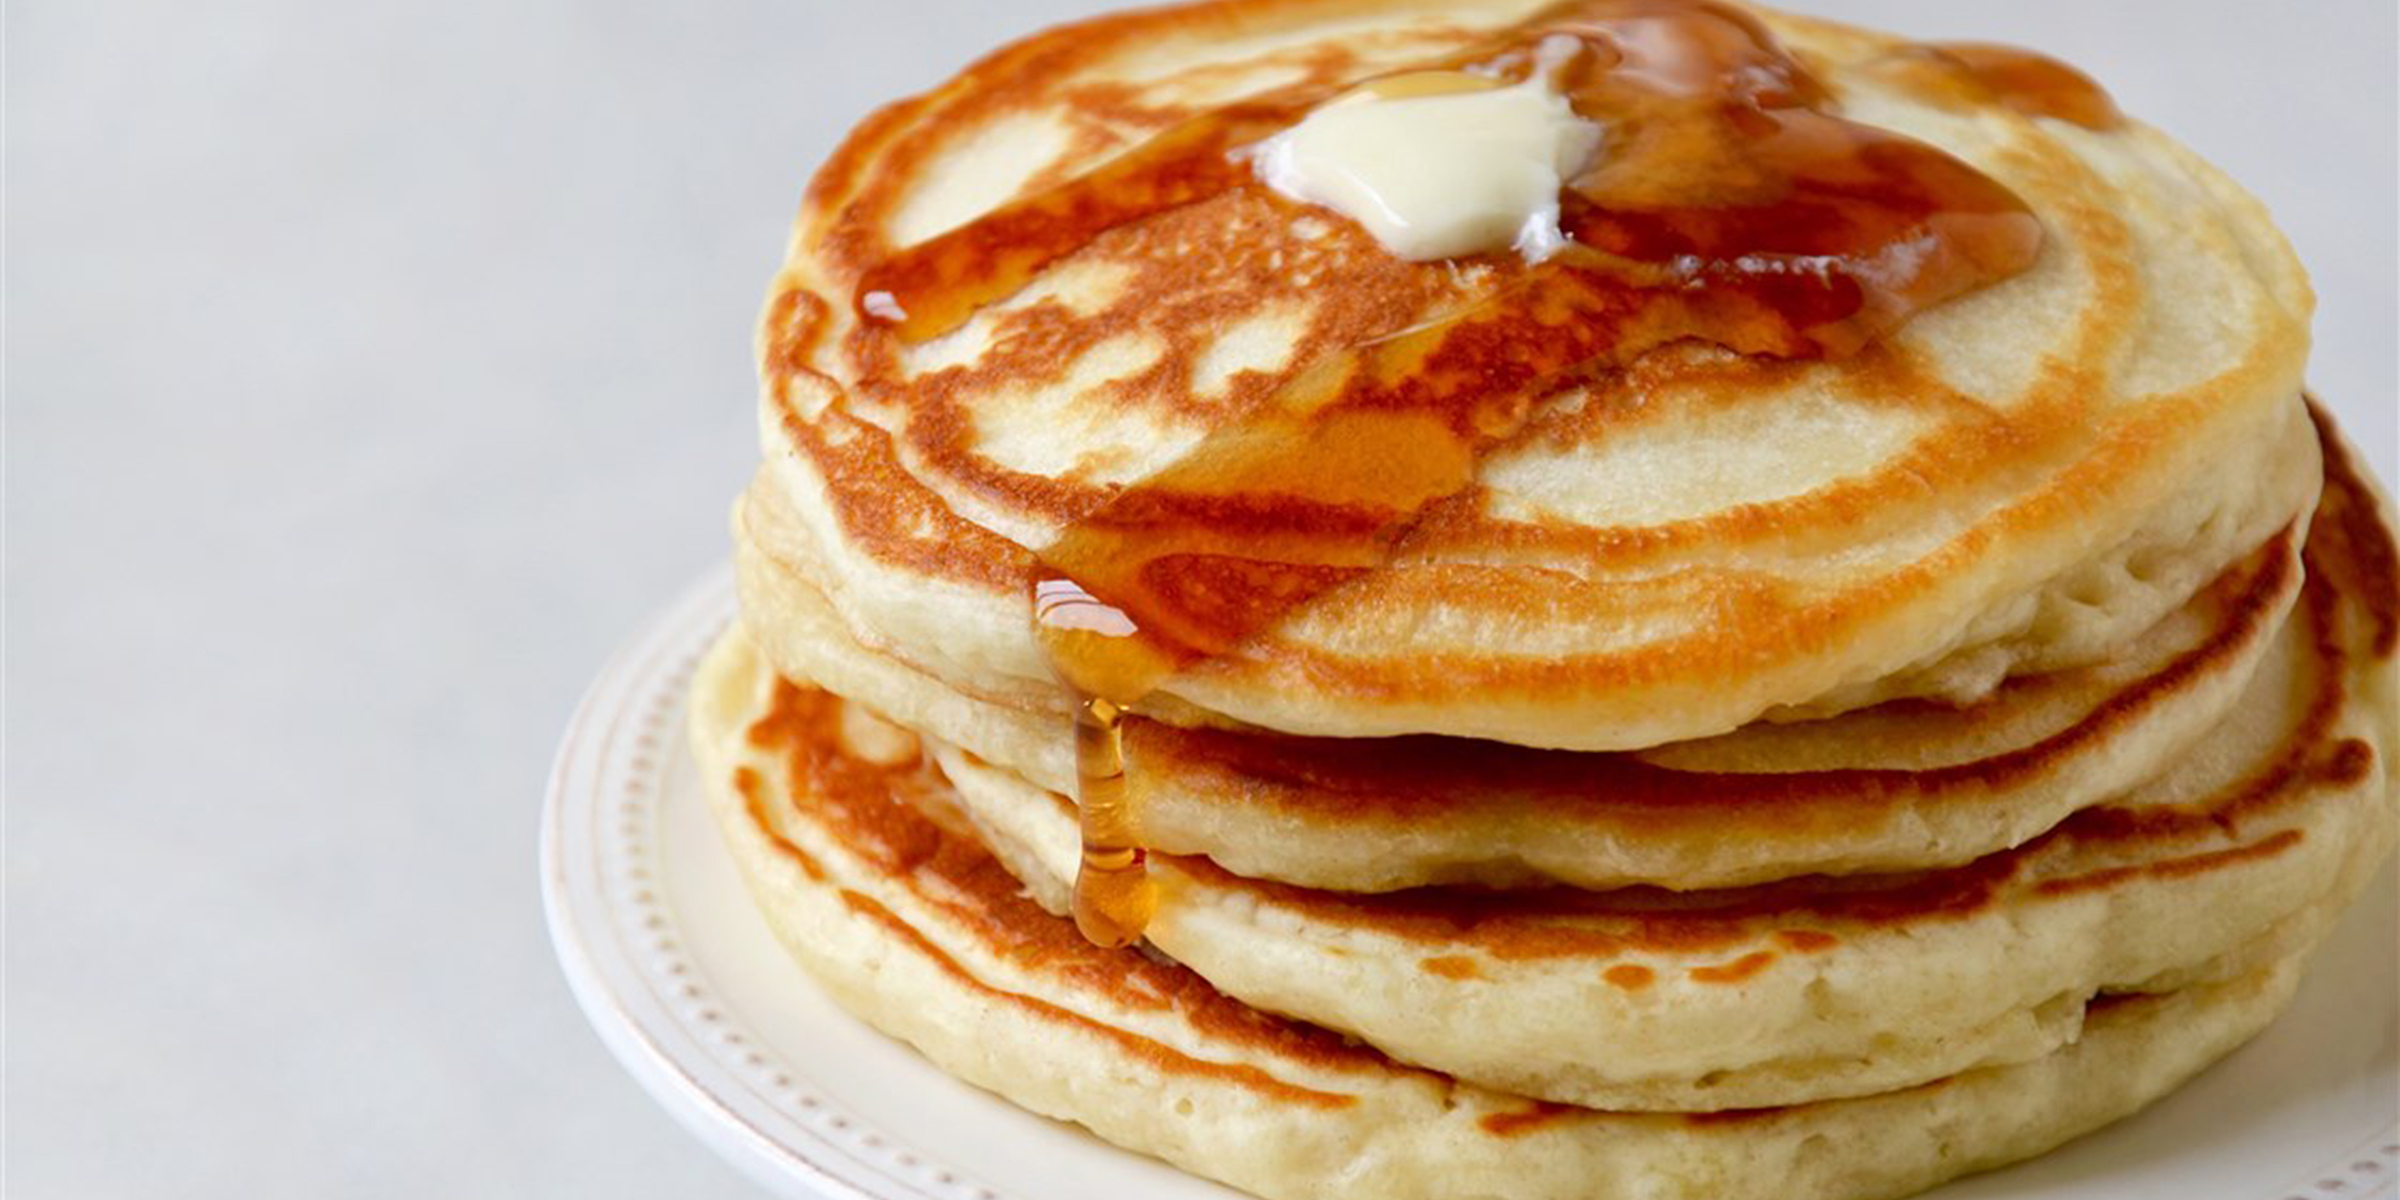 How to Make Pancakes